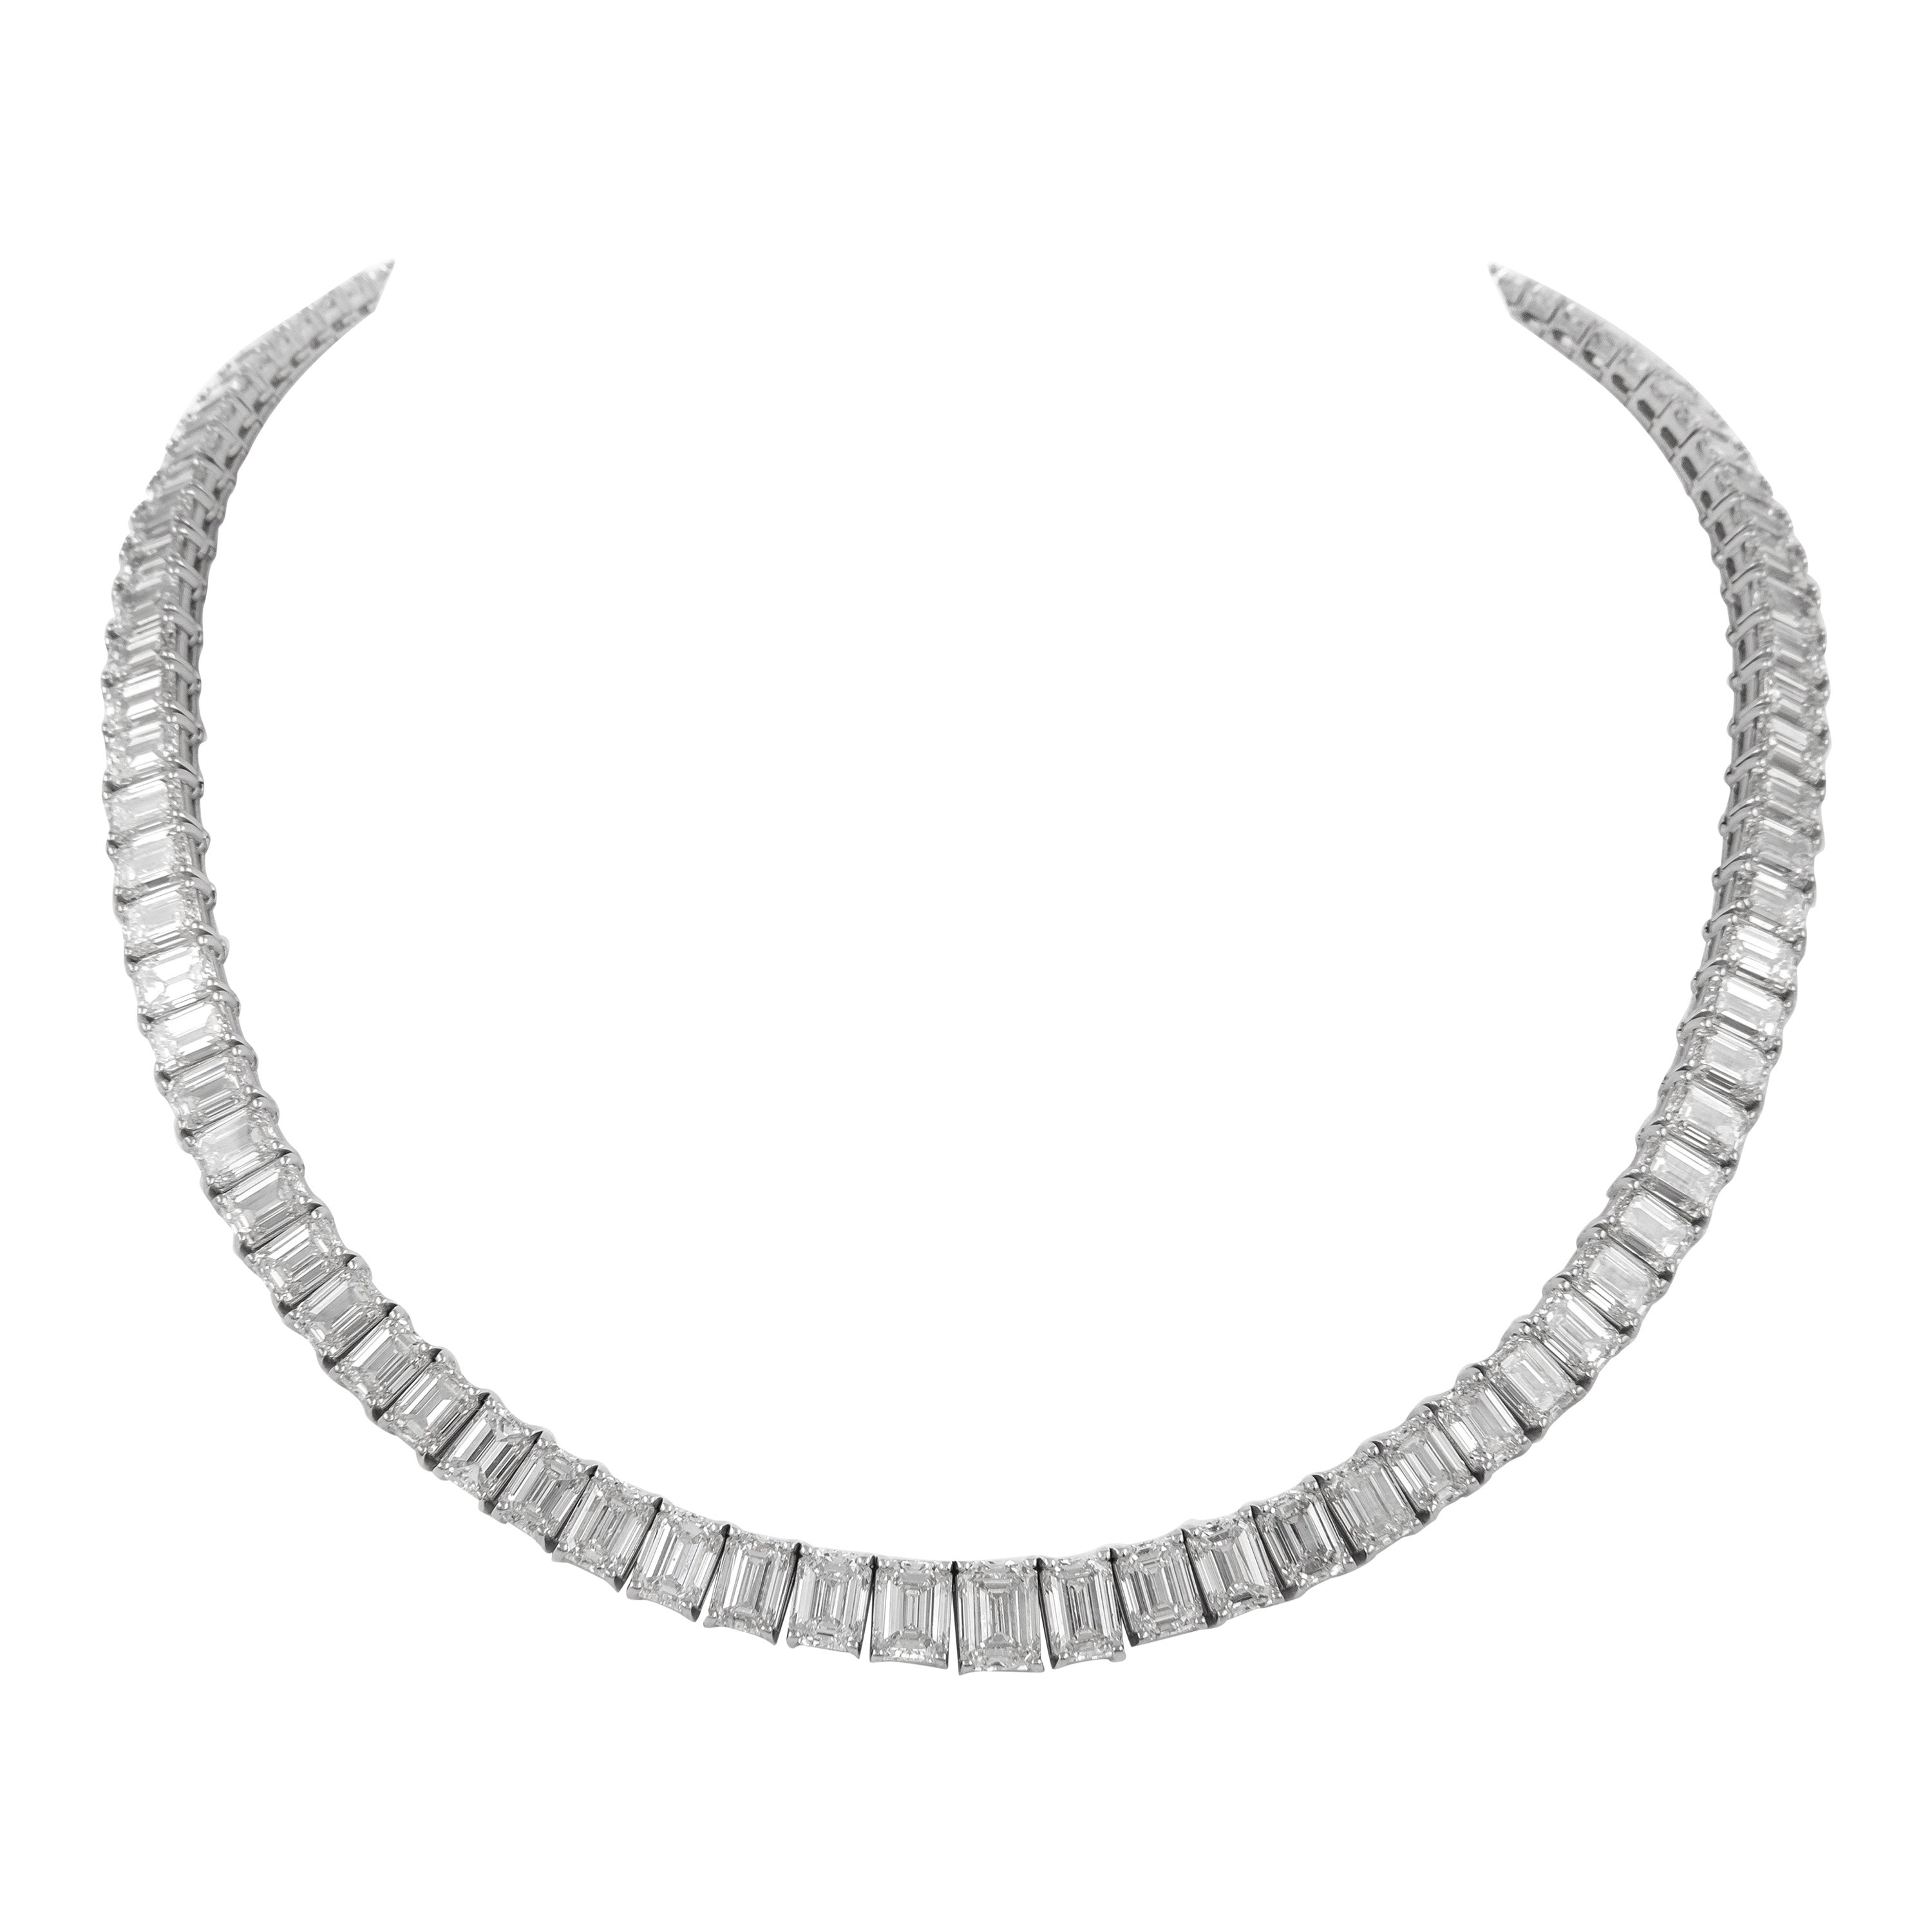 Alexander GIA 55.79 Carat Emerald Cut Diamond Tennis Necklace 18k White Gold